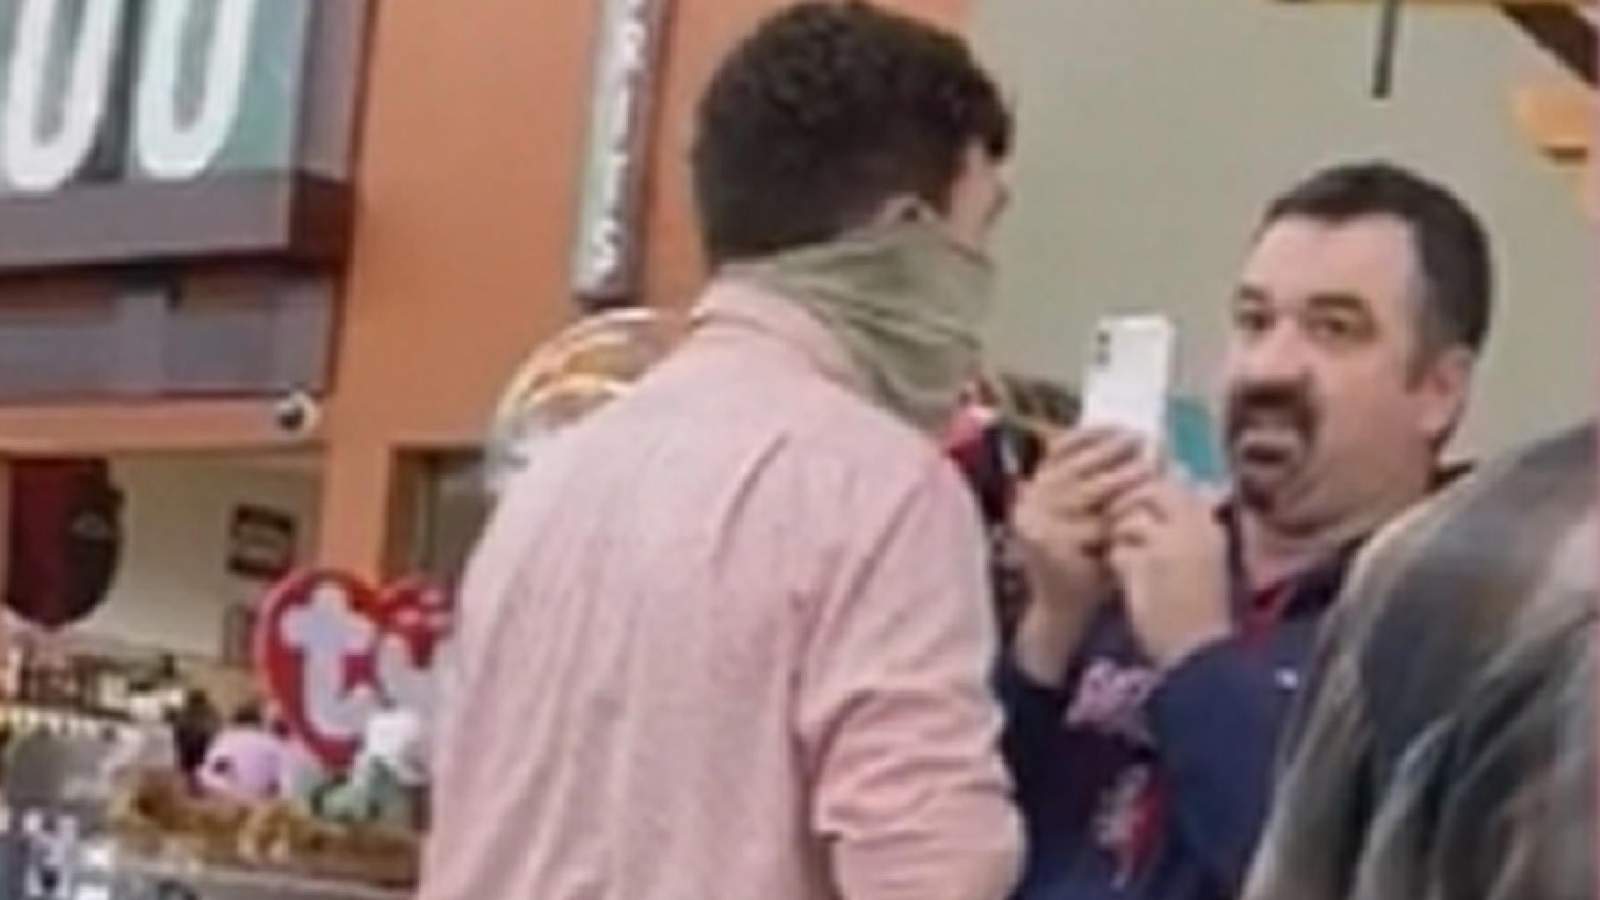 VIDEO: Flip flop thrown in viral mask confrontation